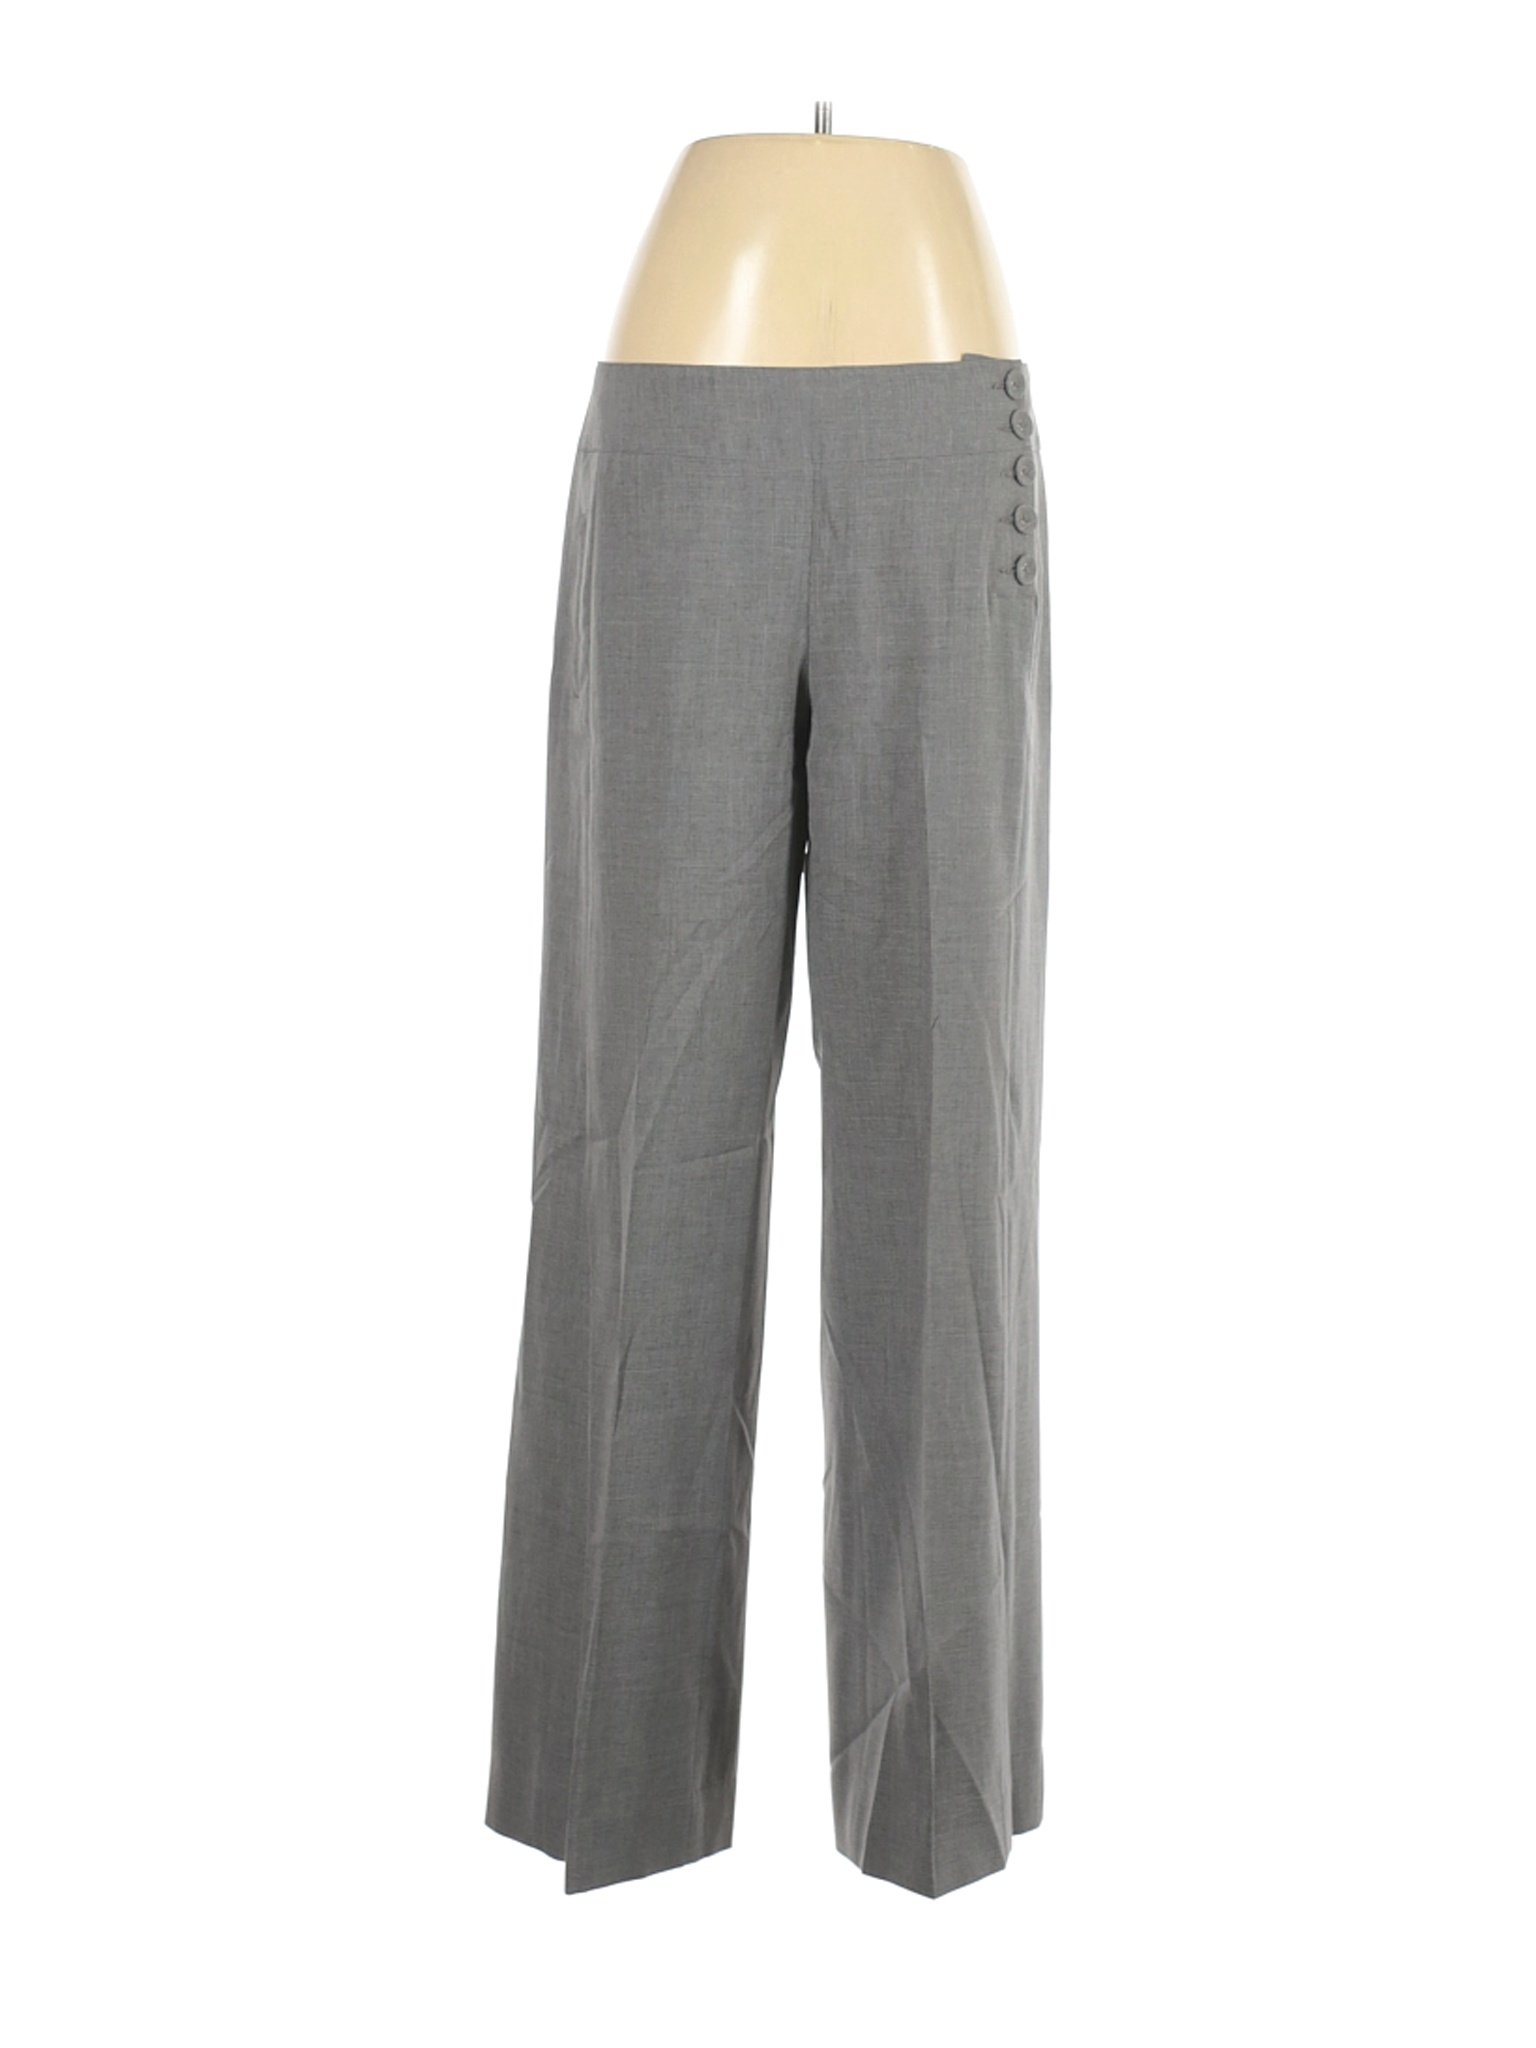 CAbi Women Gray Dress Pants 8 | eBay